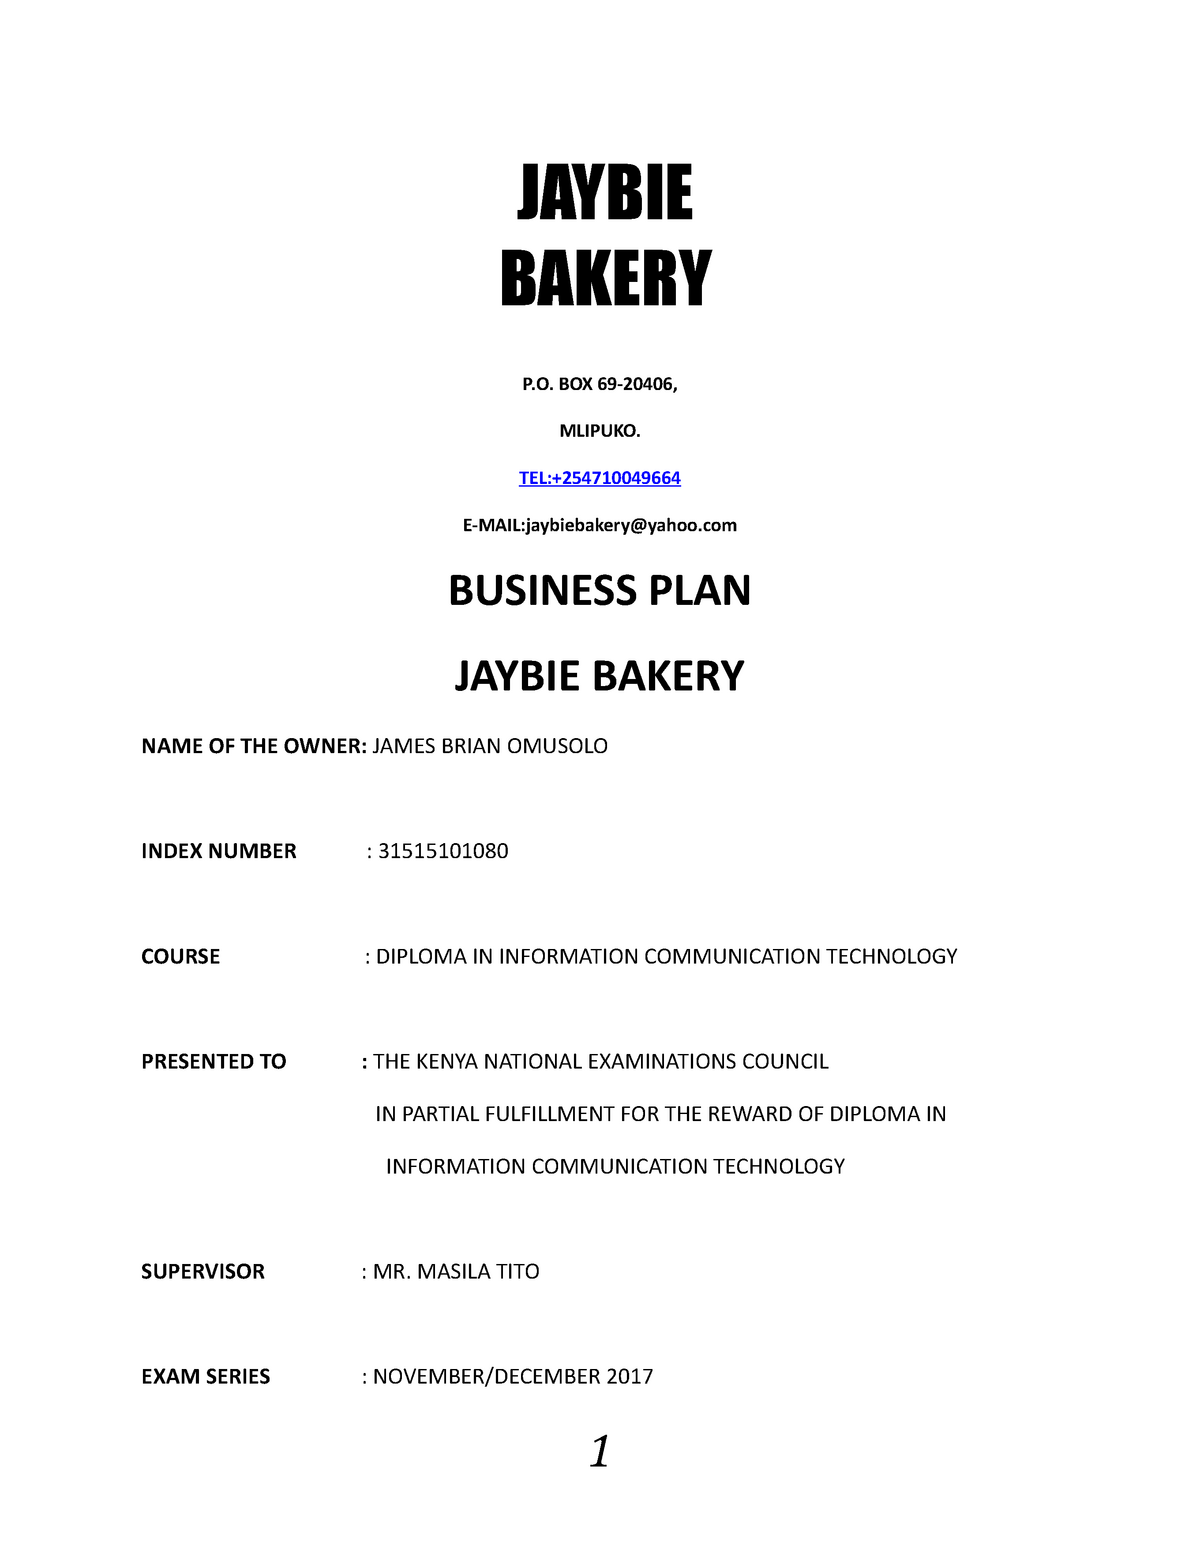 Aggregate more than 78 cake business plan sample - awesomeenglish.edu.vn